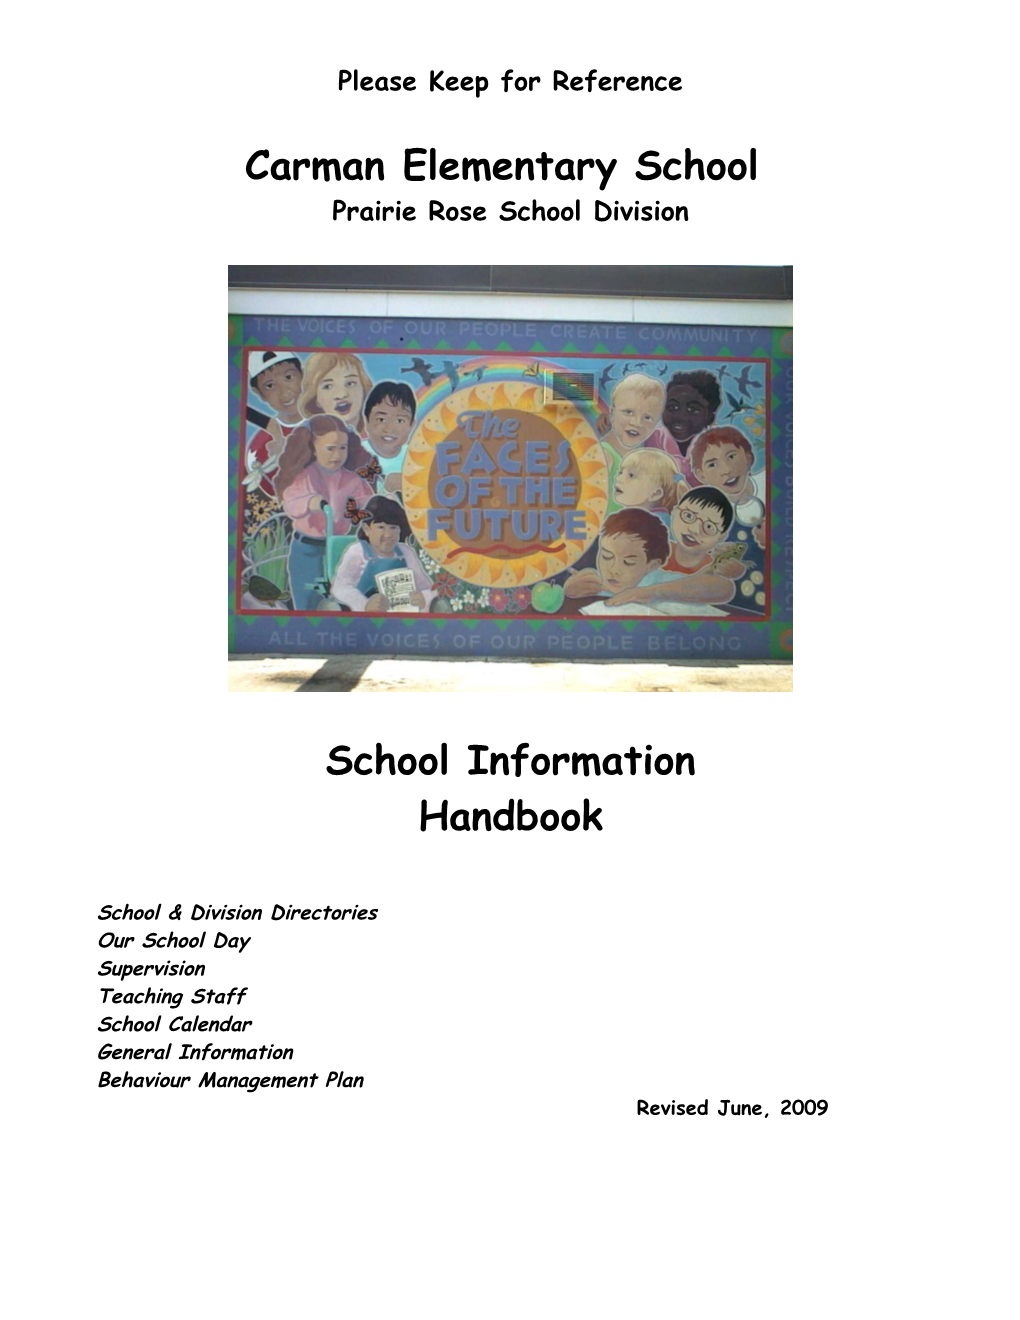 Carman Elementary School Directory